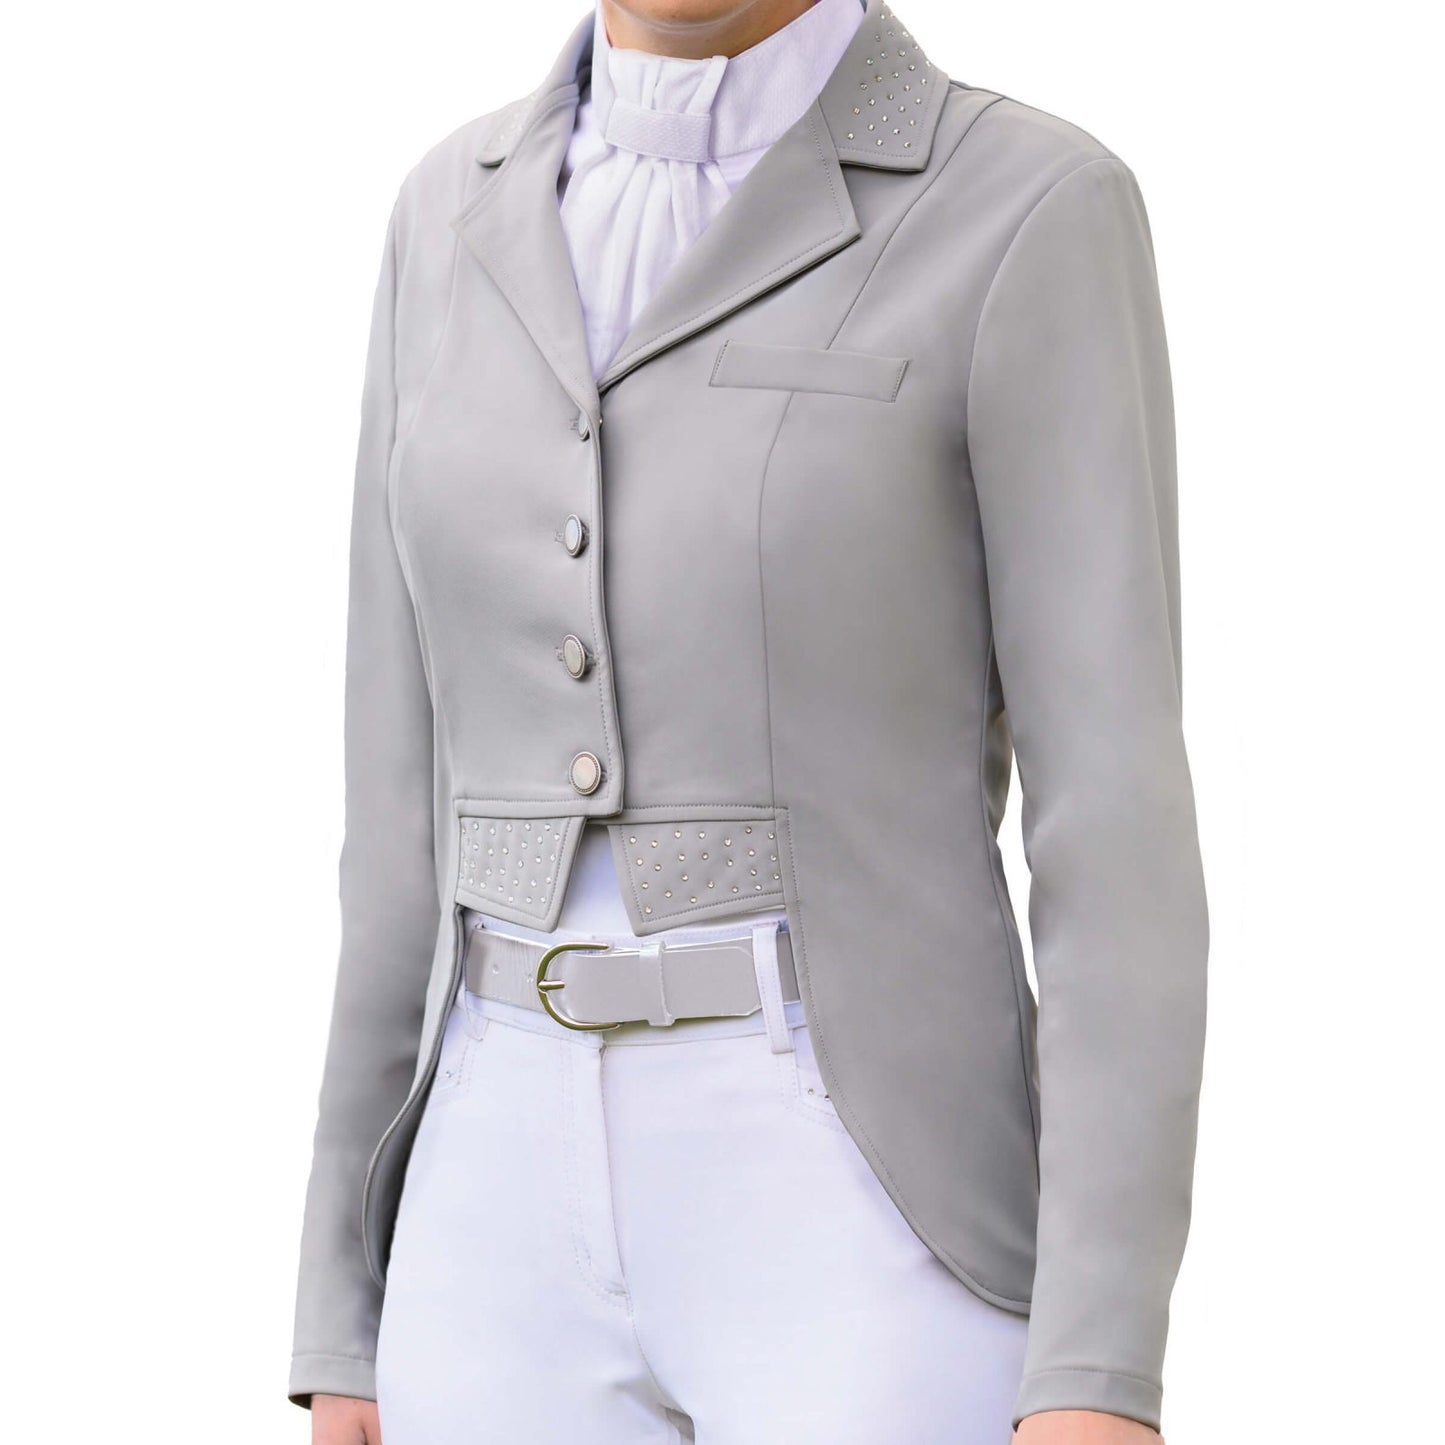 Ovation Elegance Dressage Short Tail Show Coat